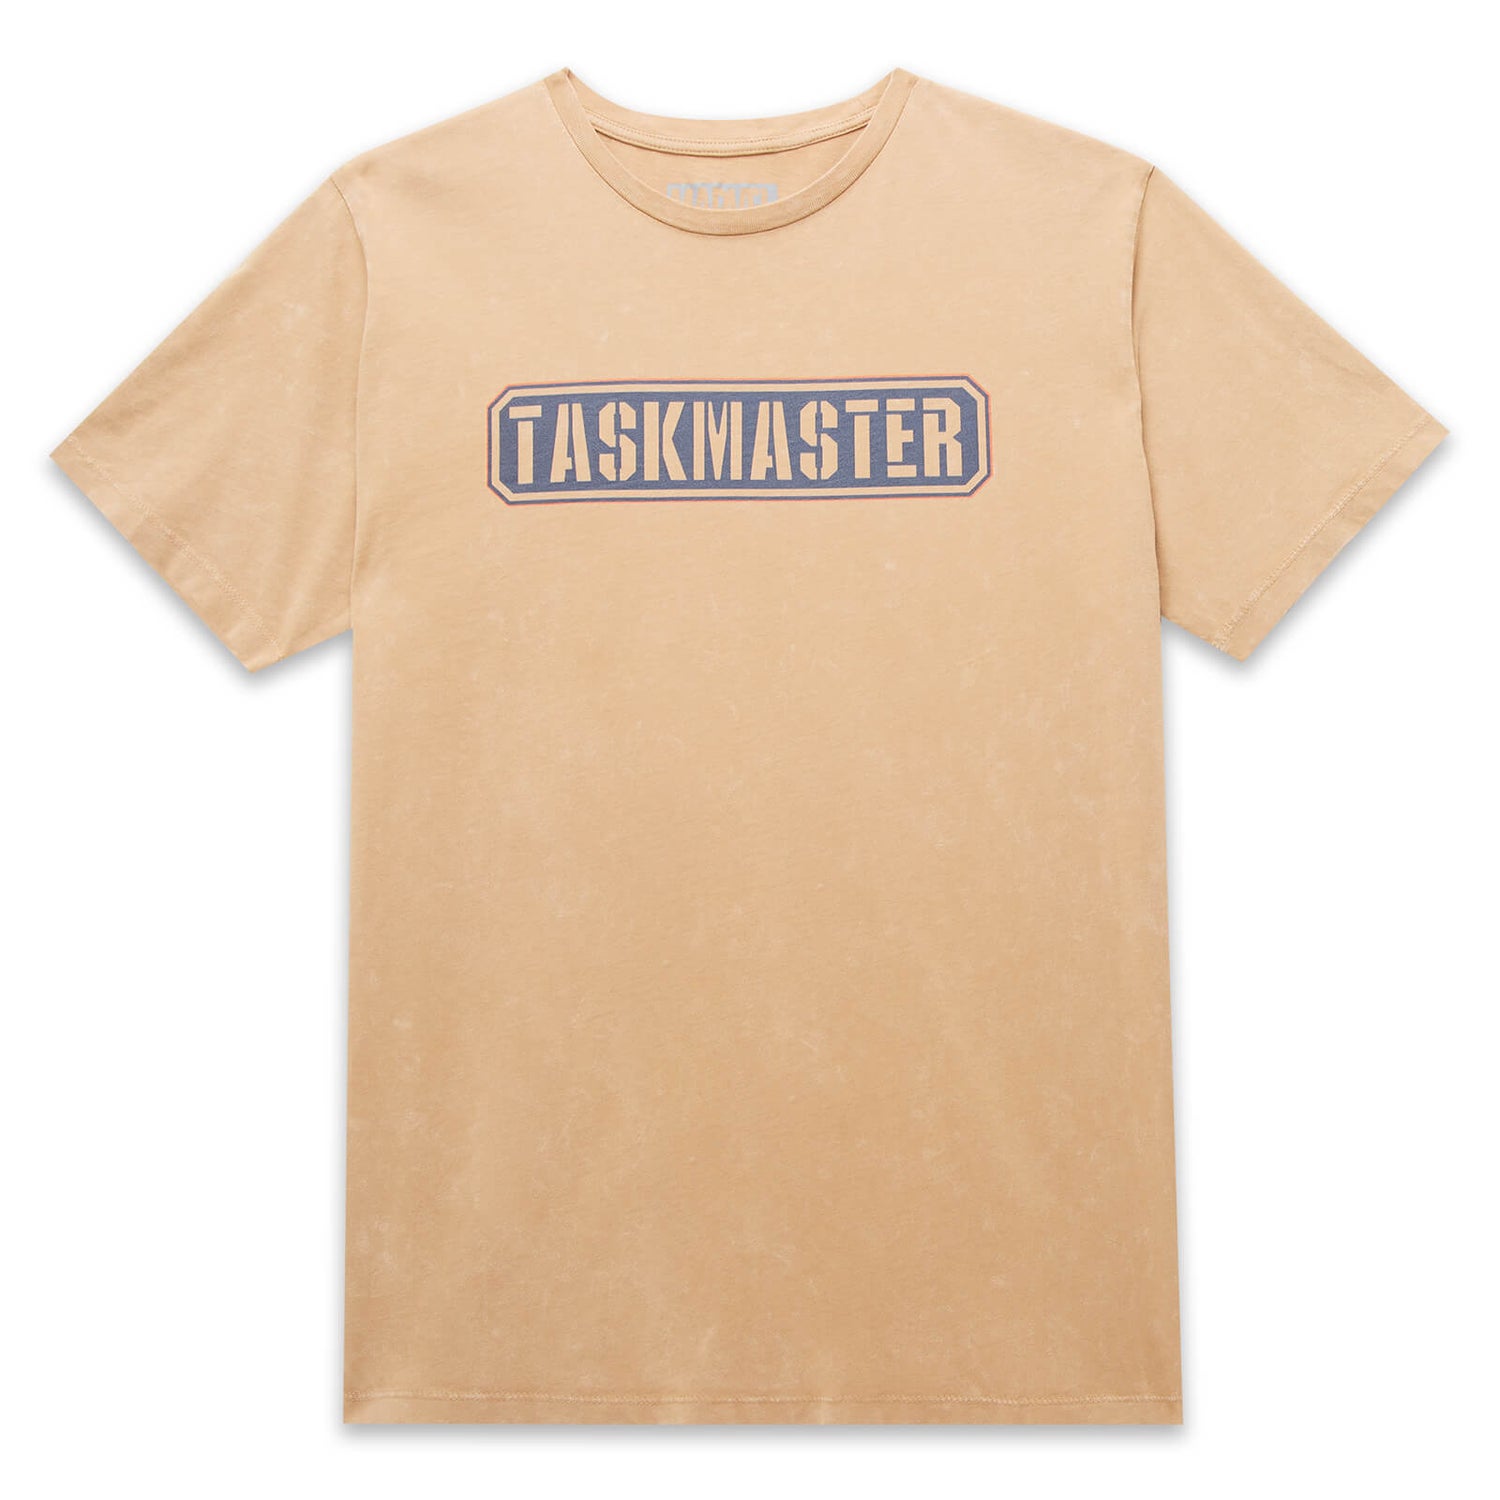 Camiseta unisex Taskmaster de Marvel - Lavado ácido bronceado